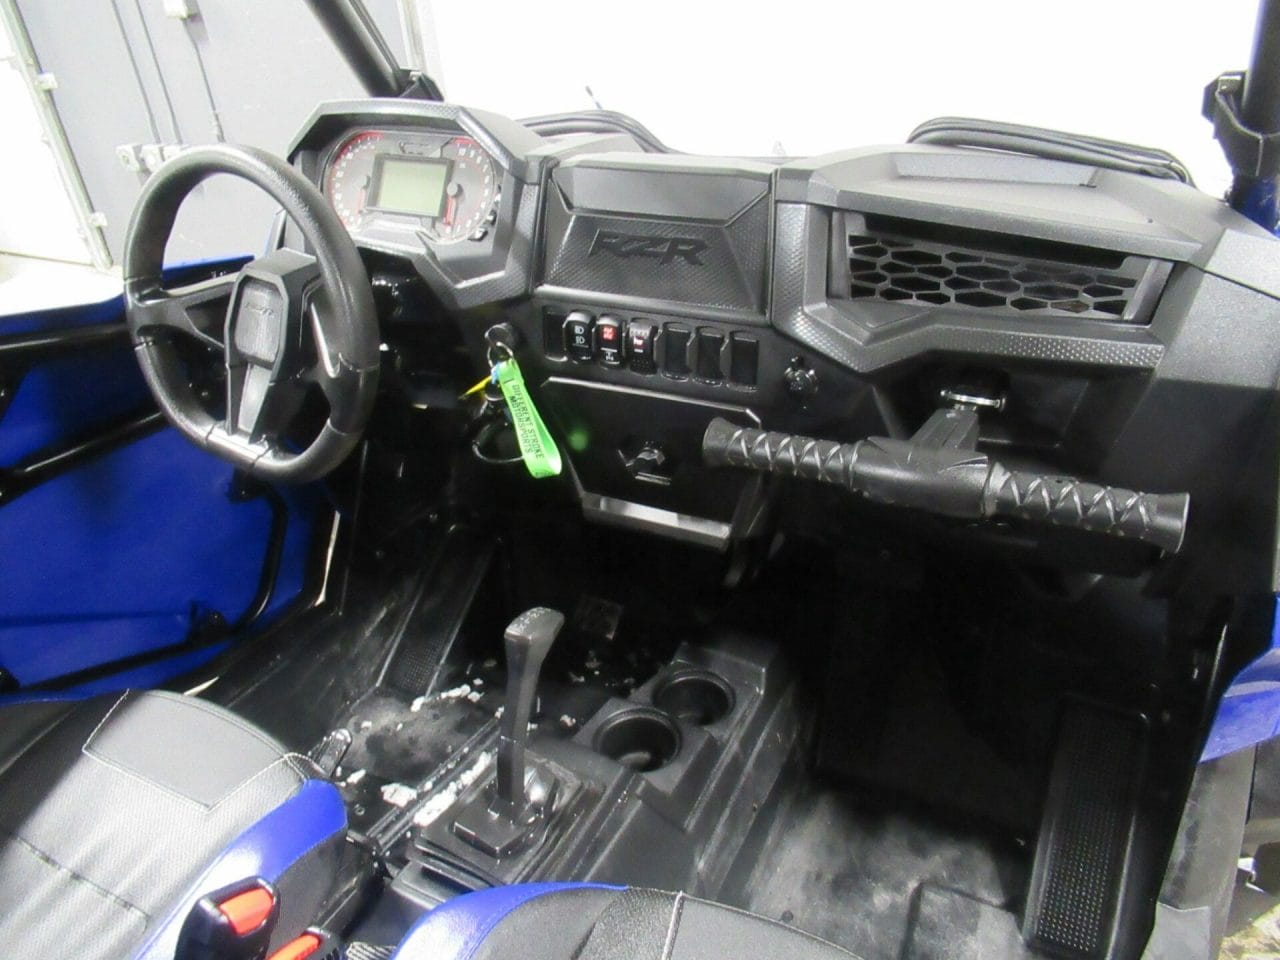 2022 Polaris RZR 1000 S Premium EPS * New KFI Winch & Snowplow *